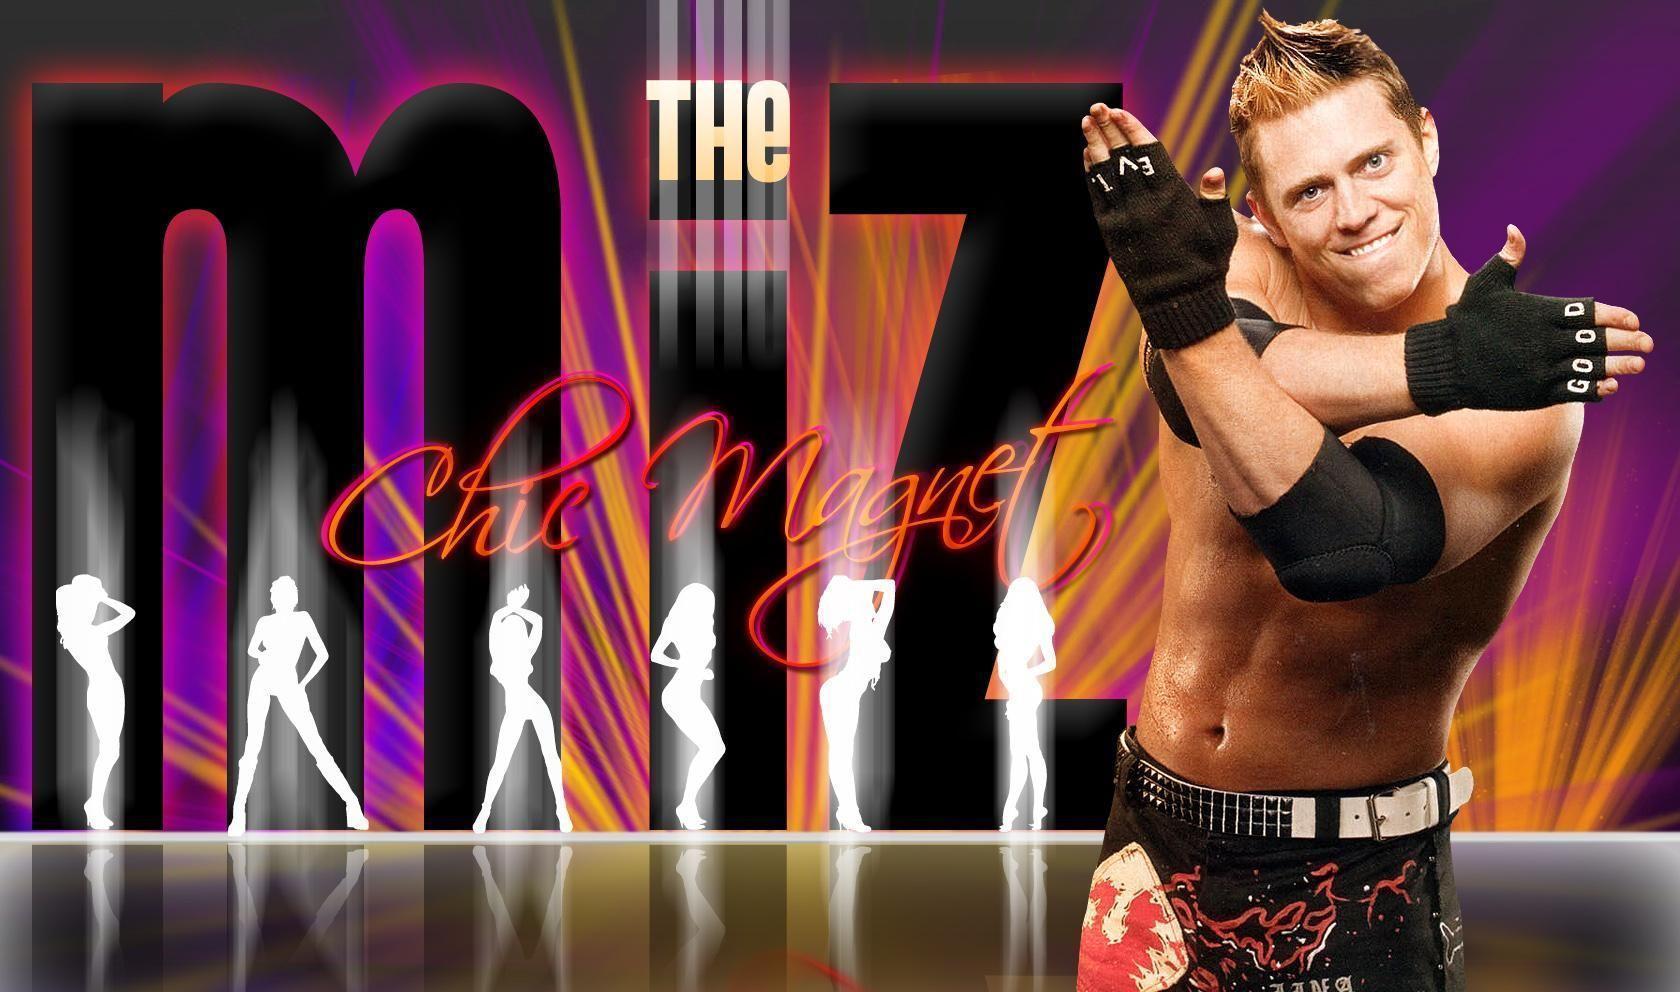 Wallpaper of The Miz Superstars, WWE Wallpaper, WWE PPV's